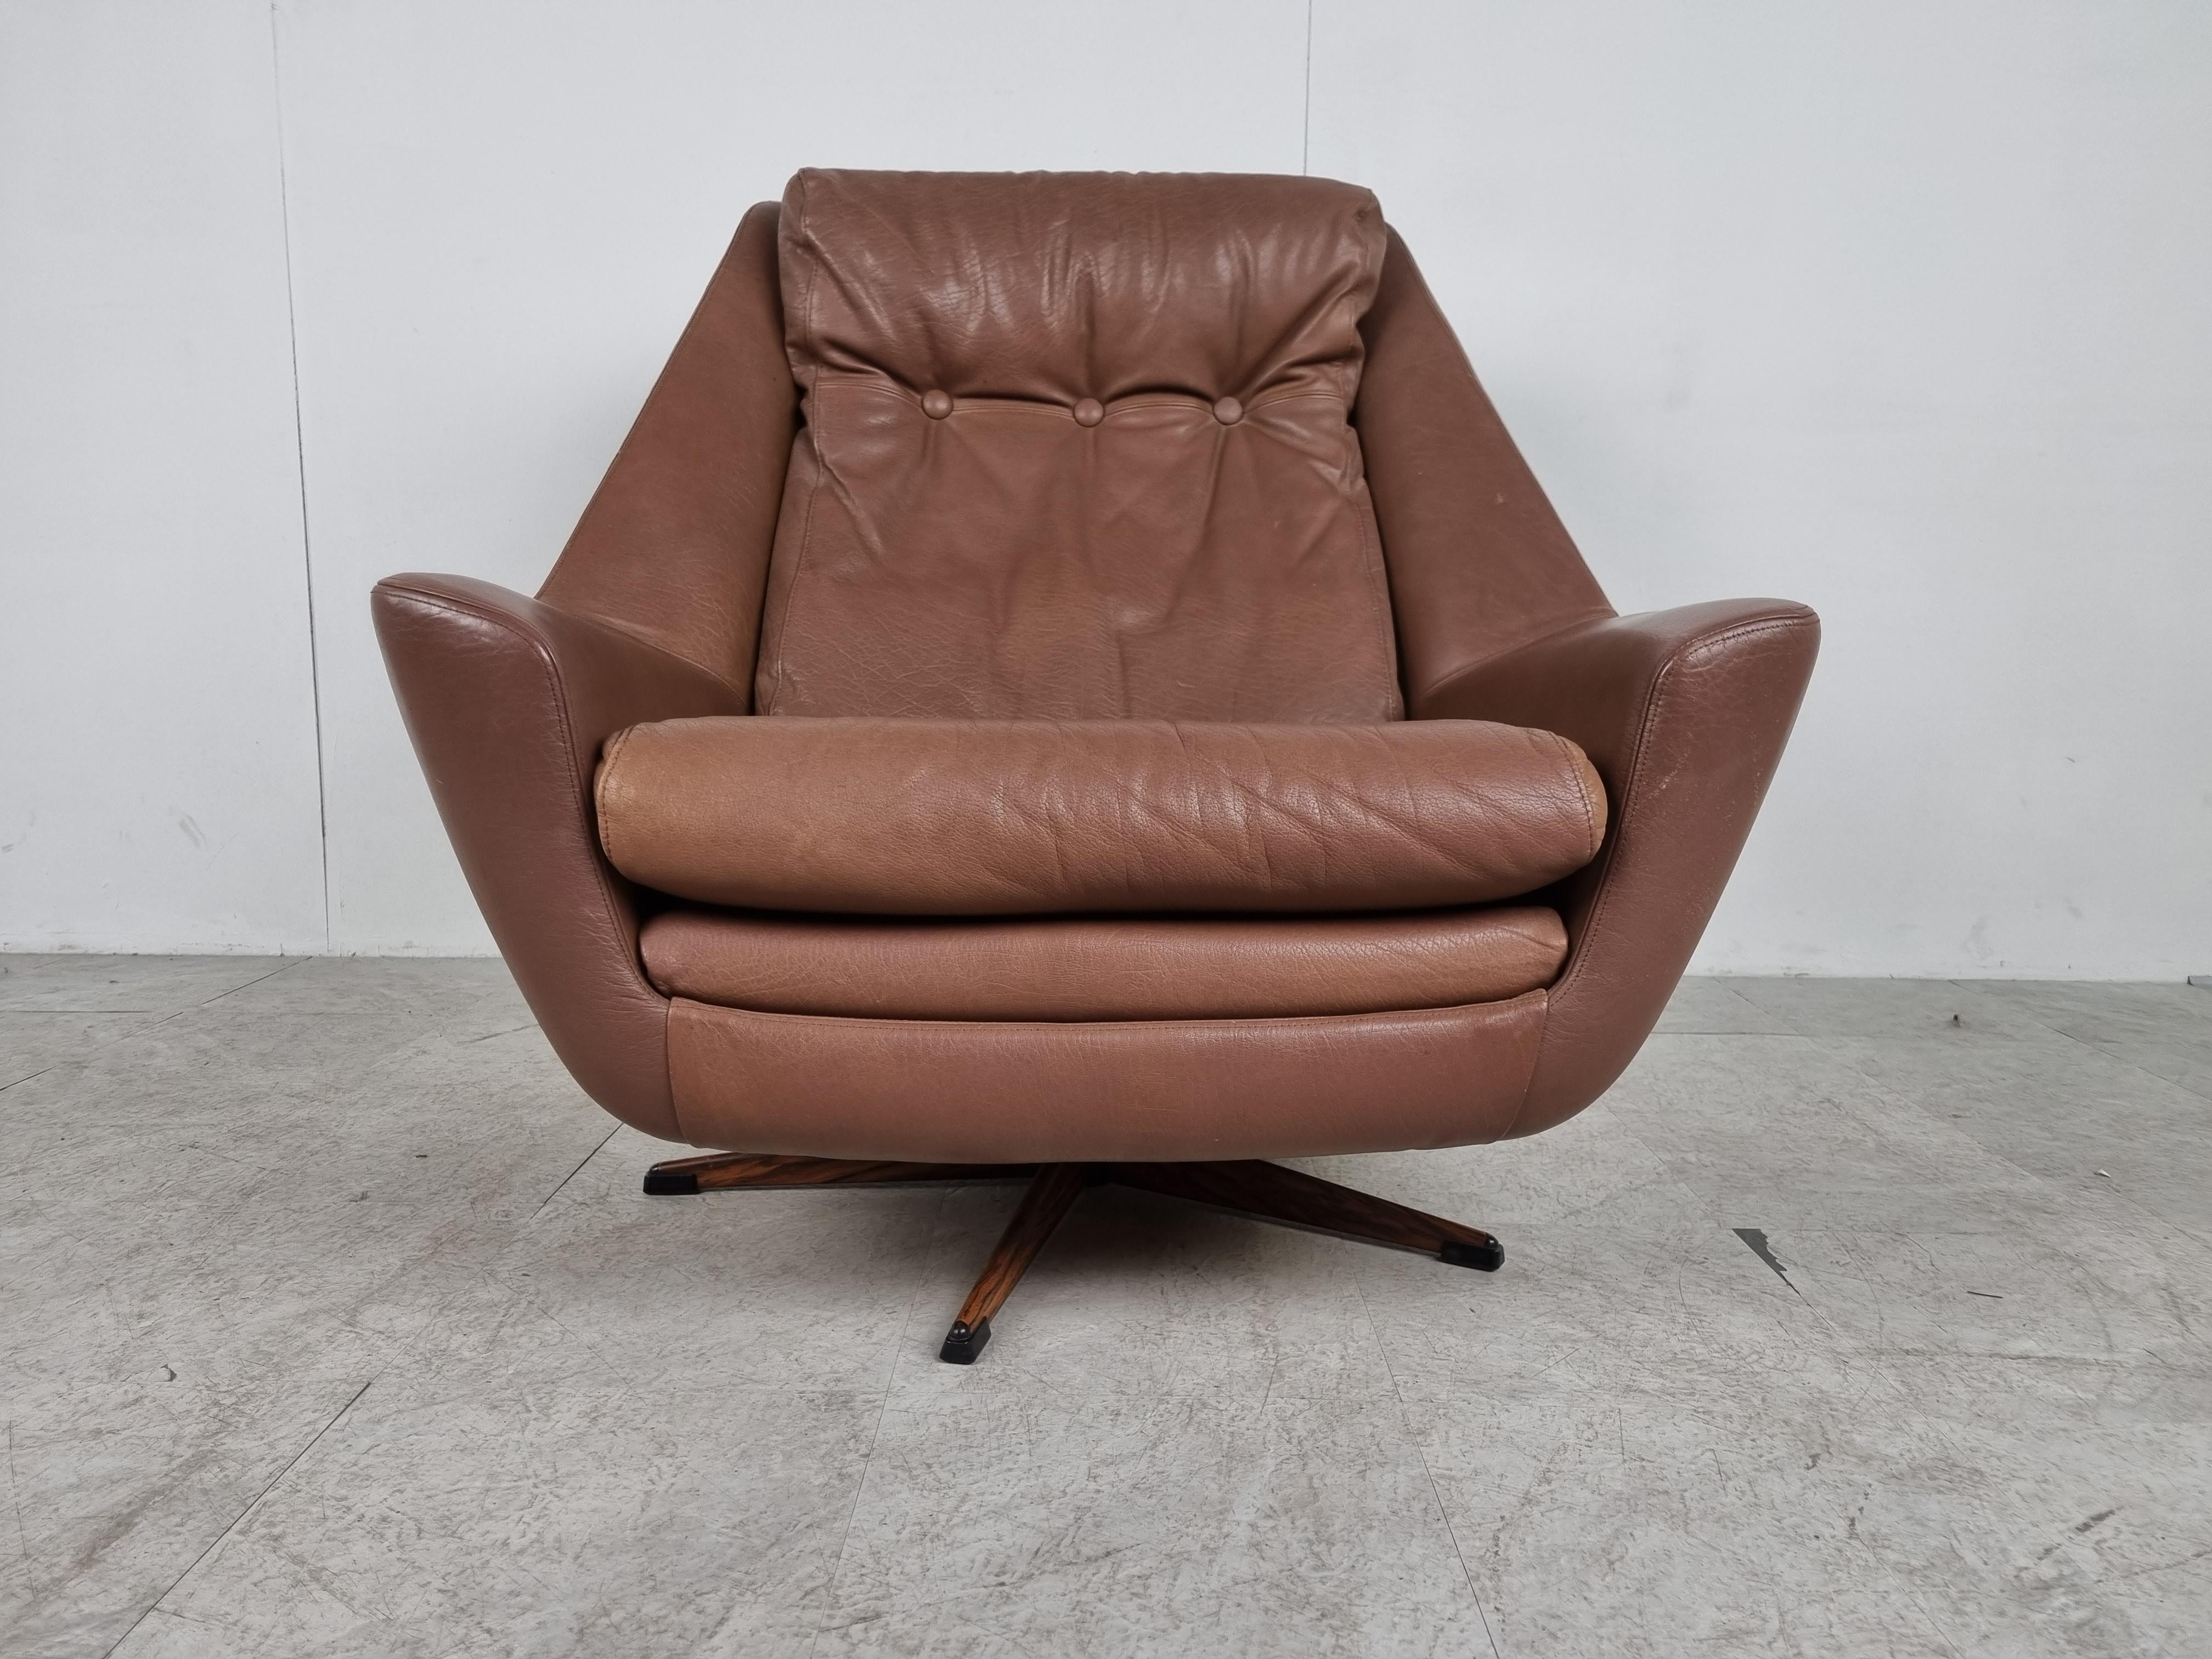 German Vintage leather swivel chair, 1970s